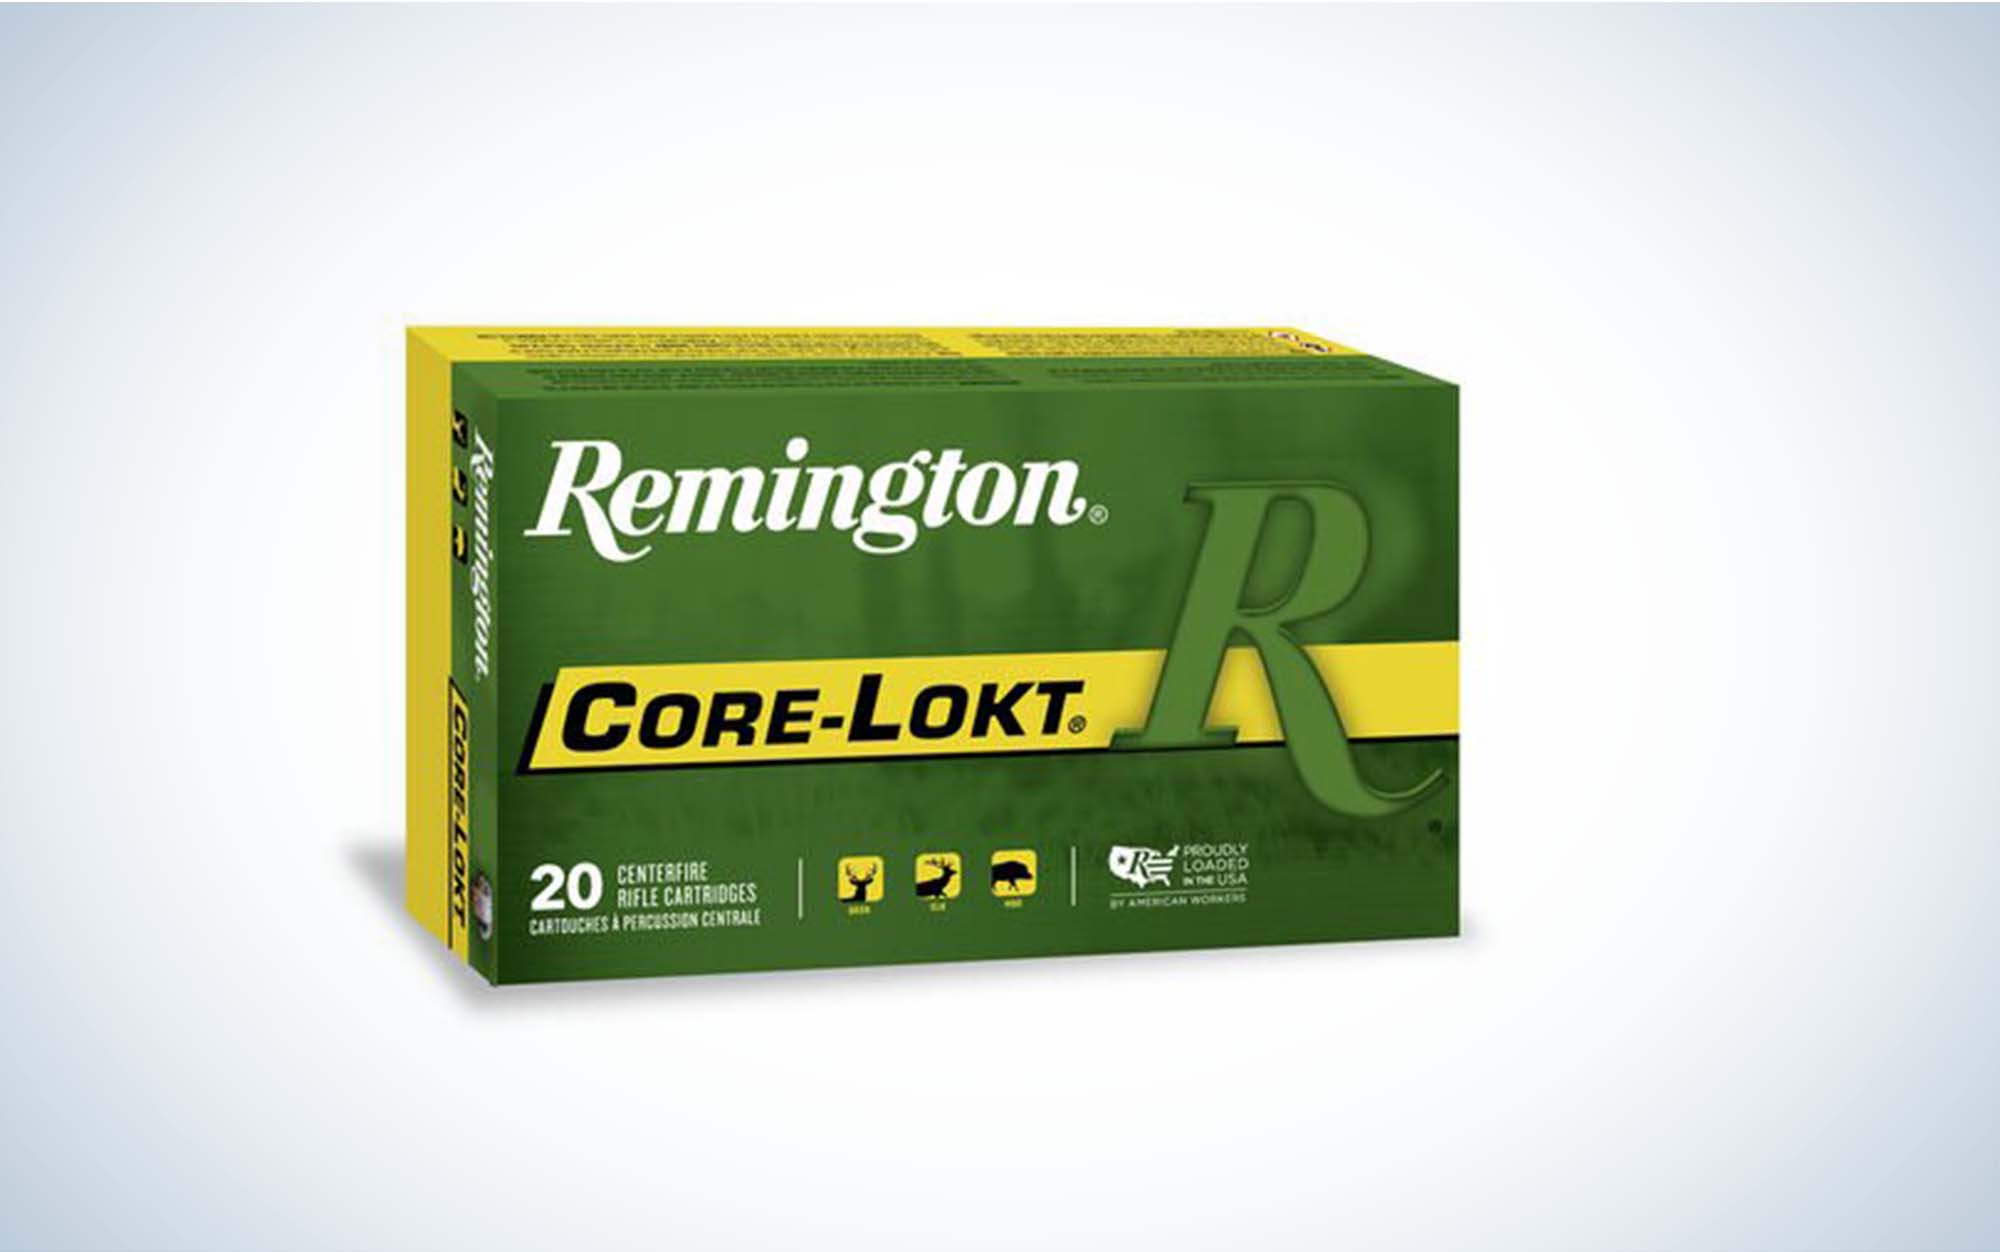 Remington Core-lokt is the best deer hunting caliber.